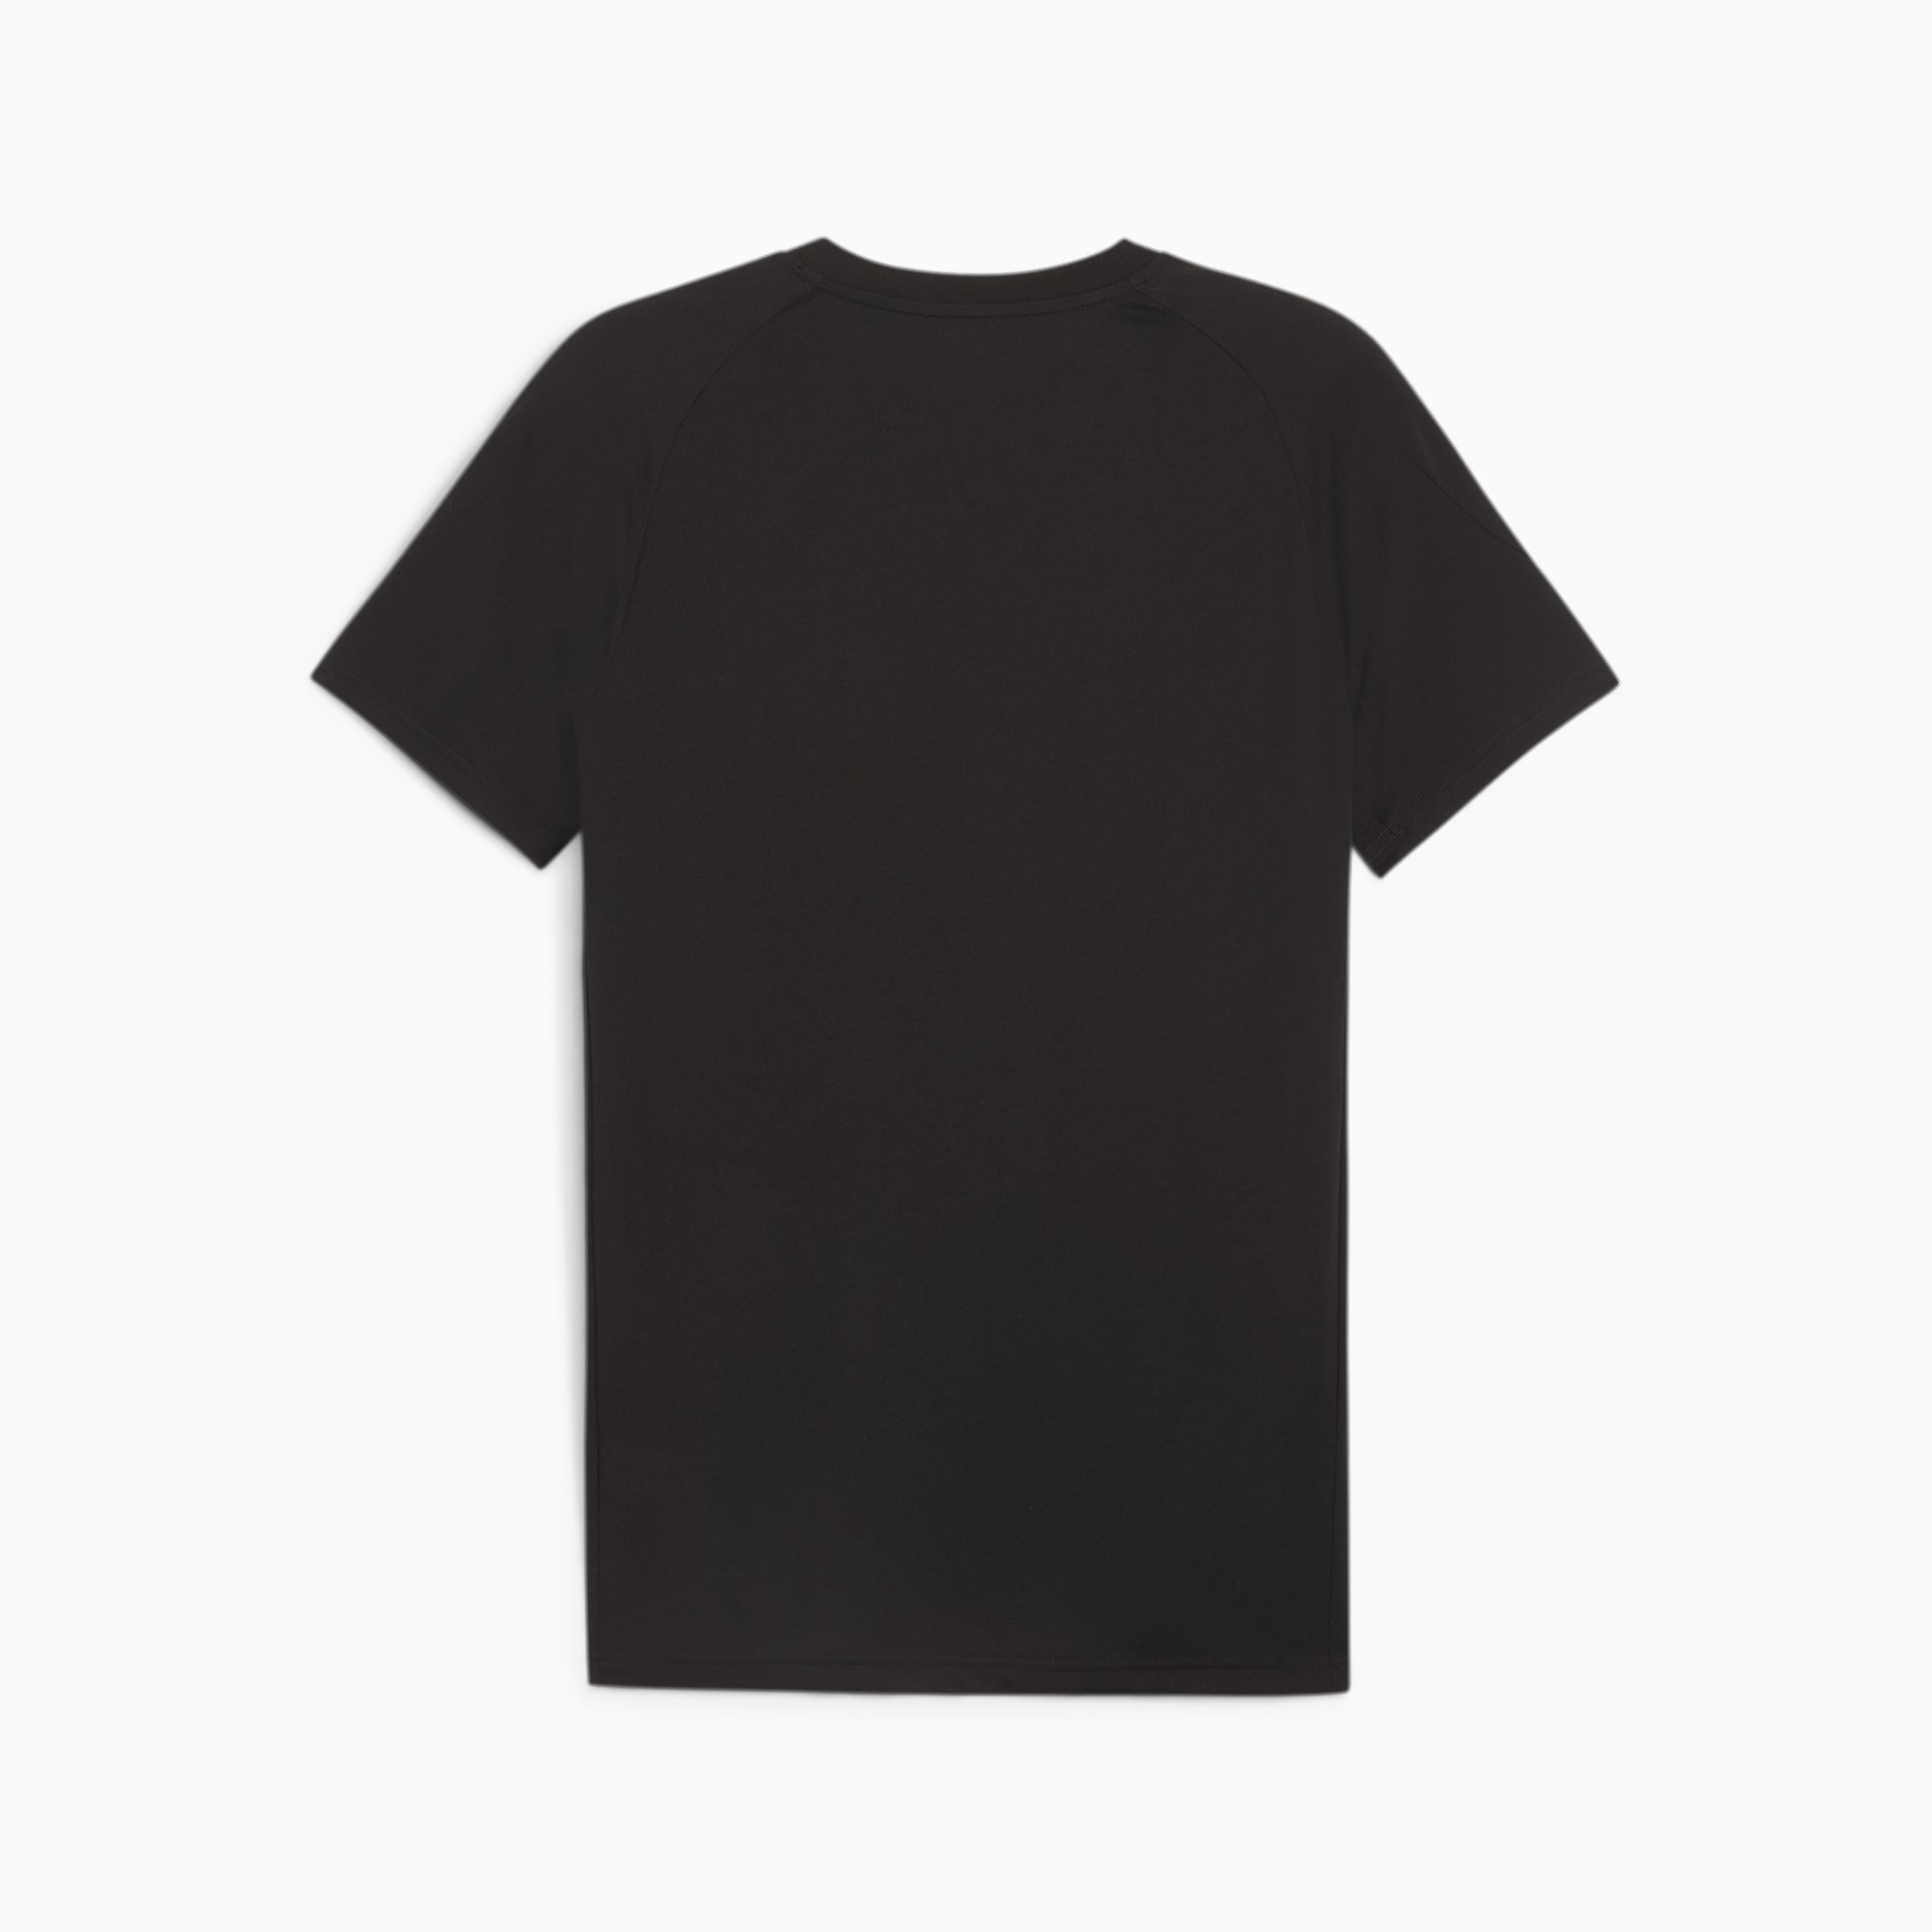 PUMA Evostripe T-Shirt Zwart Wit